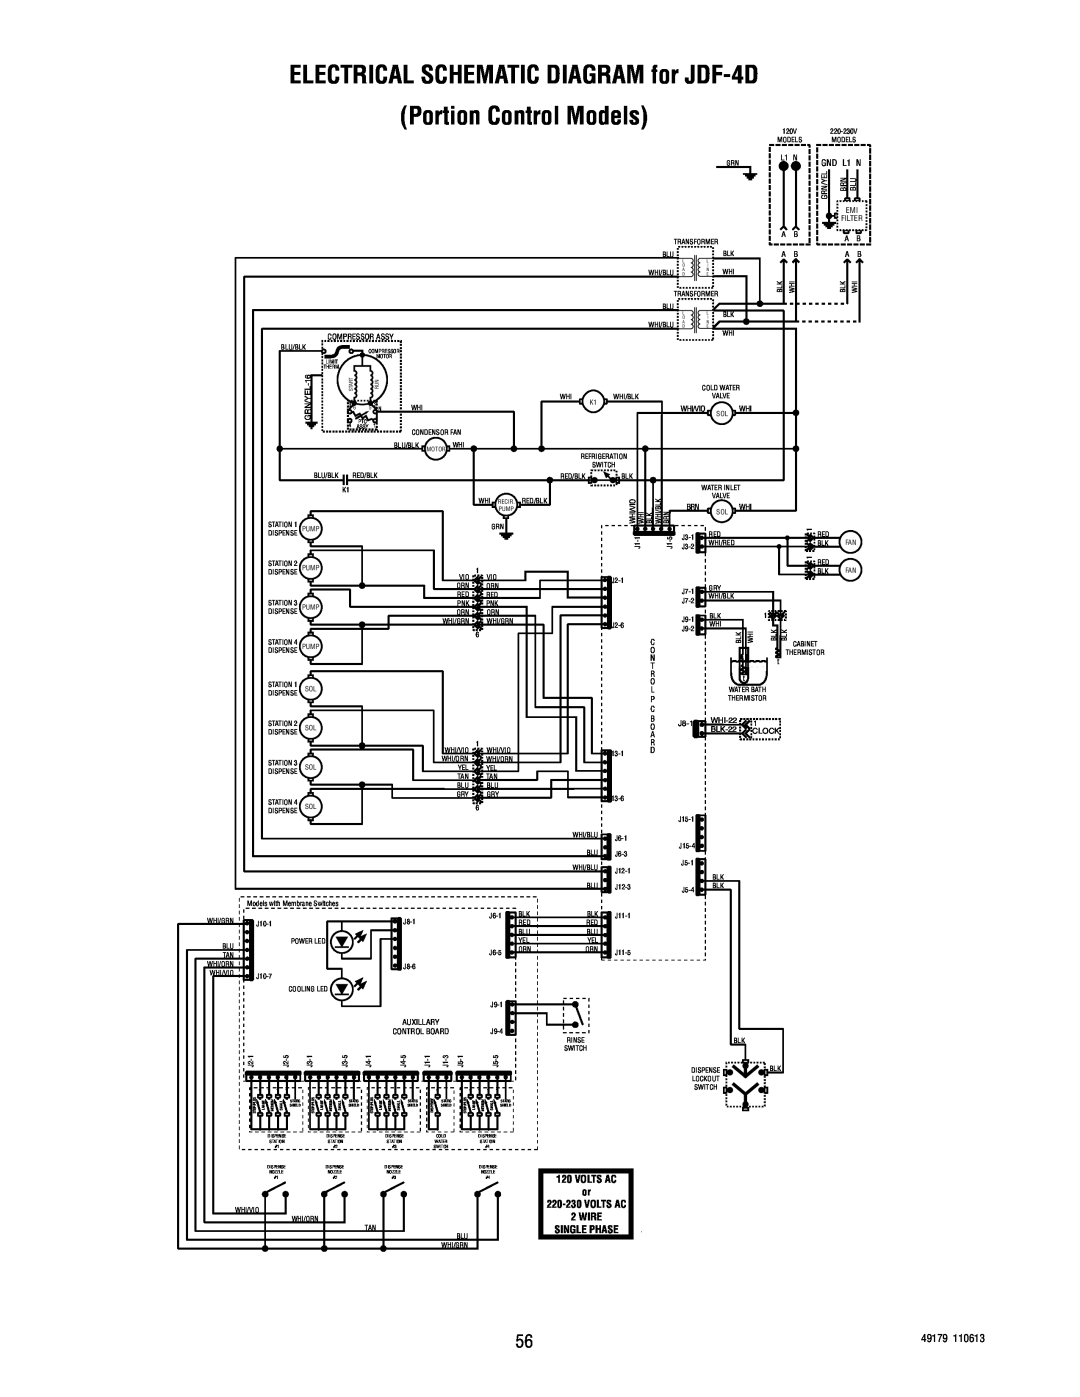 Bunn ELECTRICAL SCHEMATIC DIAGRAM for JDF-4D Portion Control Models, SCHEMATIC WIRING DIAGRAM JDF-4D, 49179, 110613 